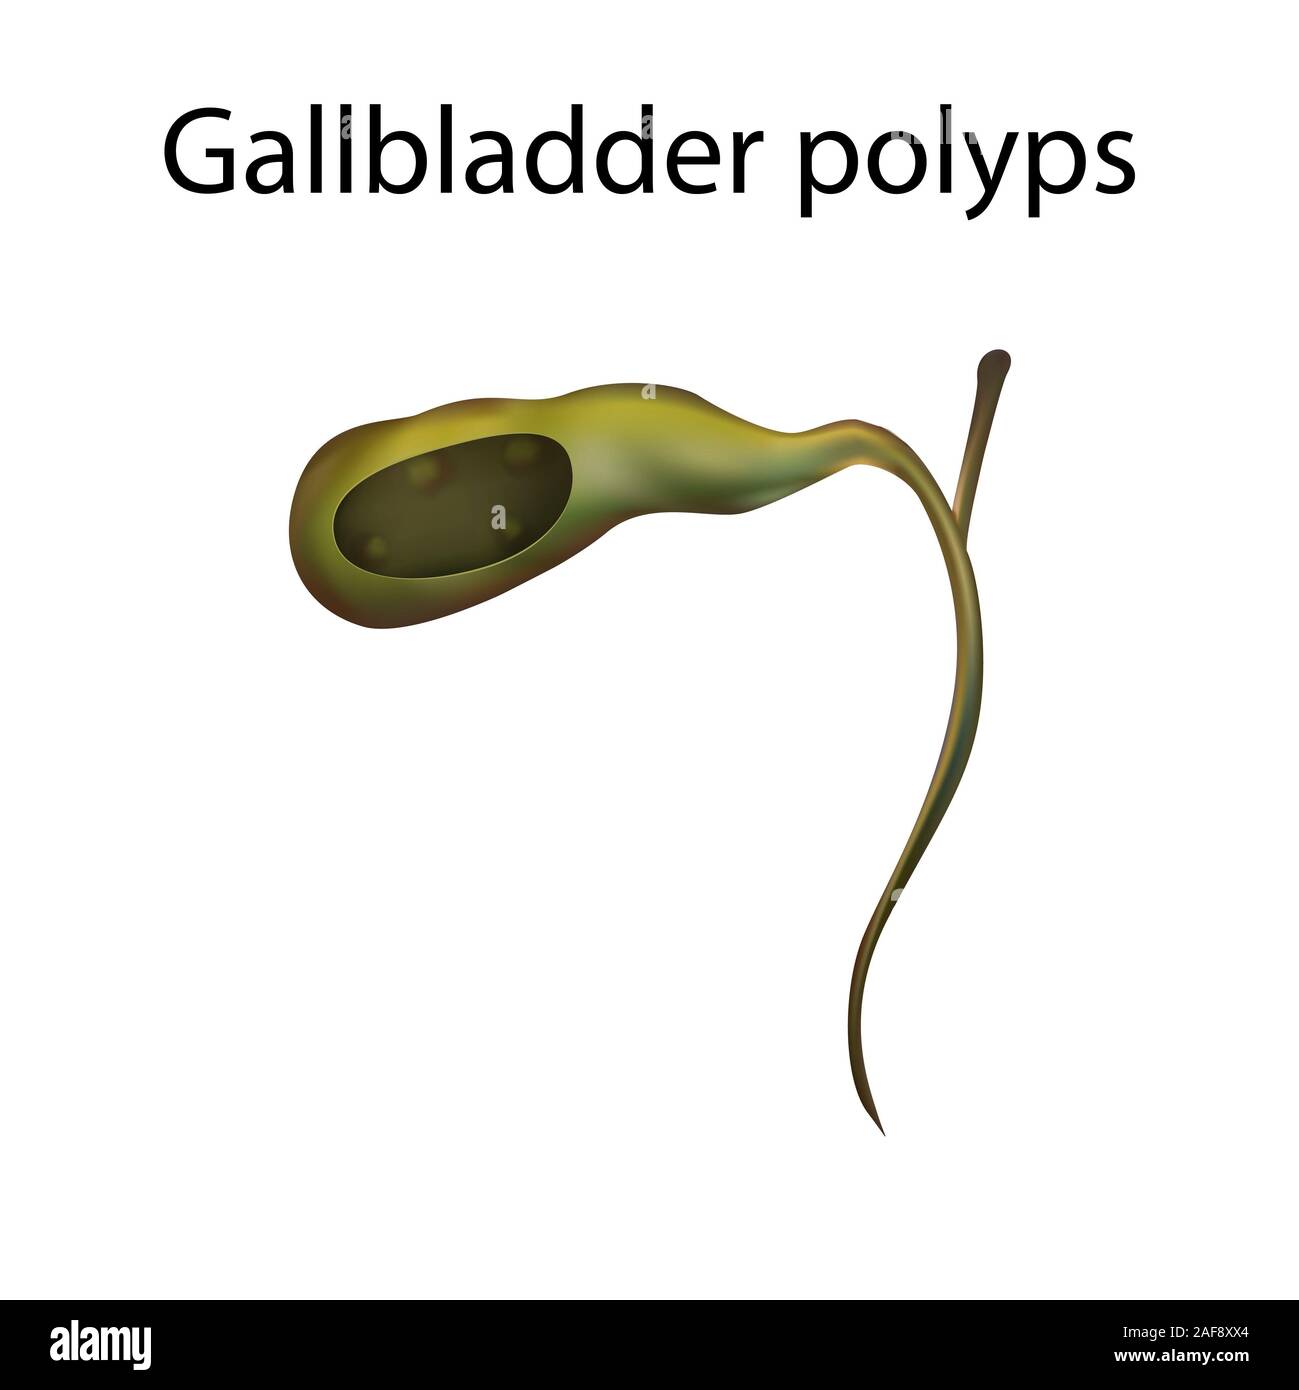 Gallbladder polyps, illustration Stock Photo